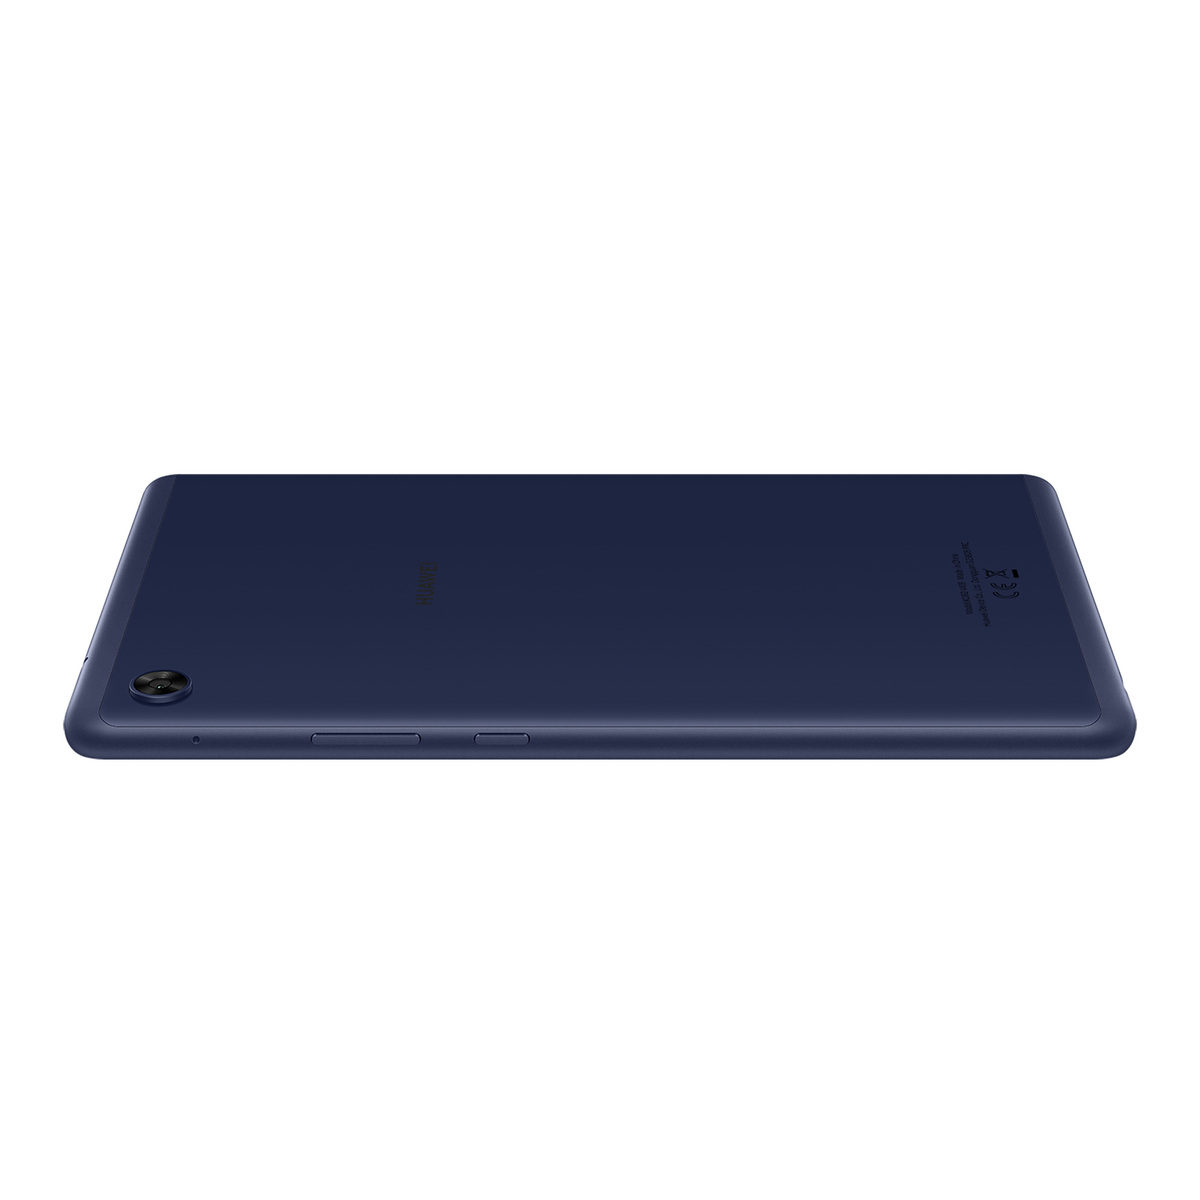 HUAWEI MatePad T8 Tablet, Blue (Deepsea Blue), 3 GB RAM, 32 GB Internal Storage